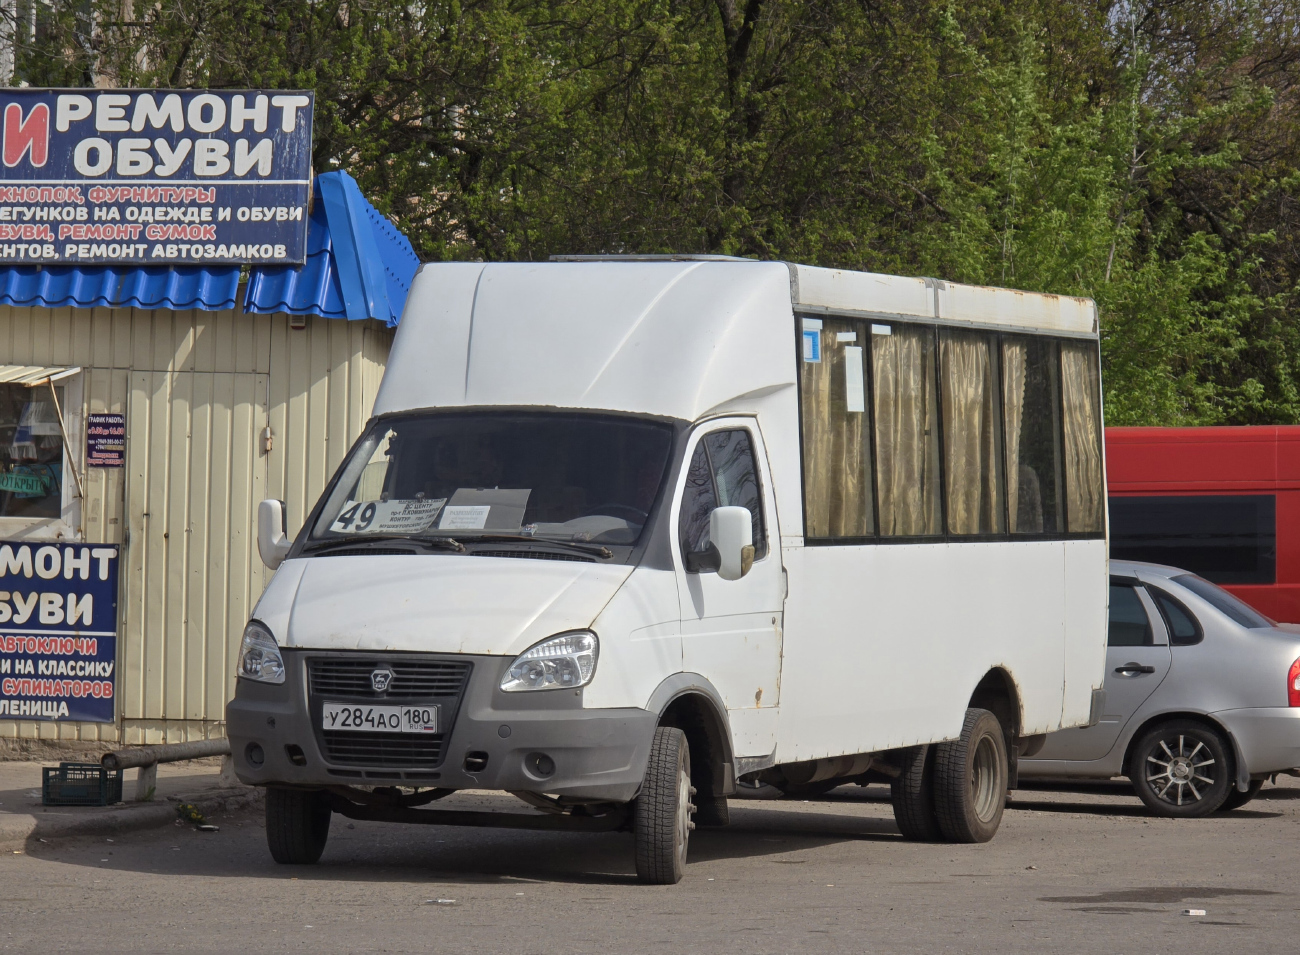 Donetsk, Ruta 20 # У 284 АО 180